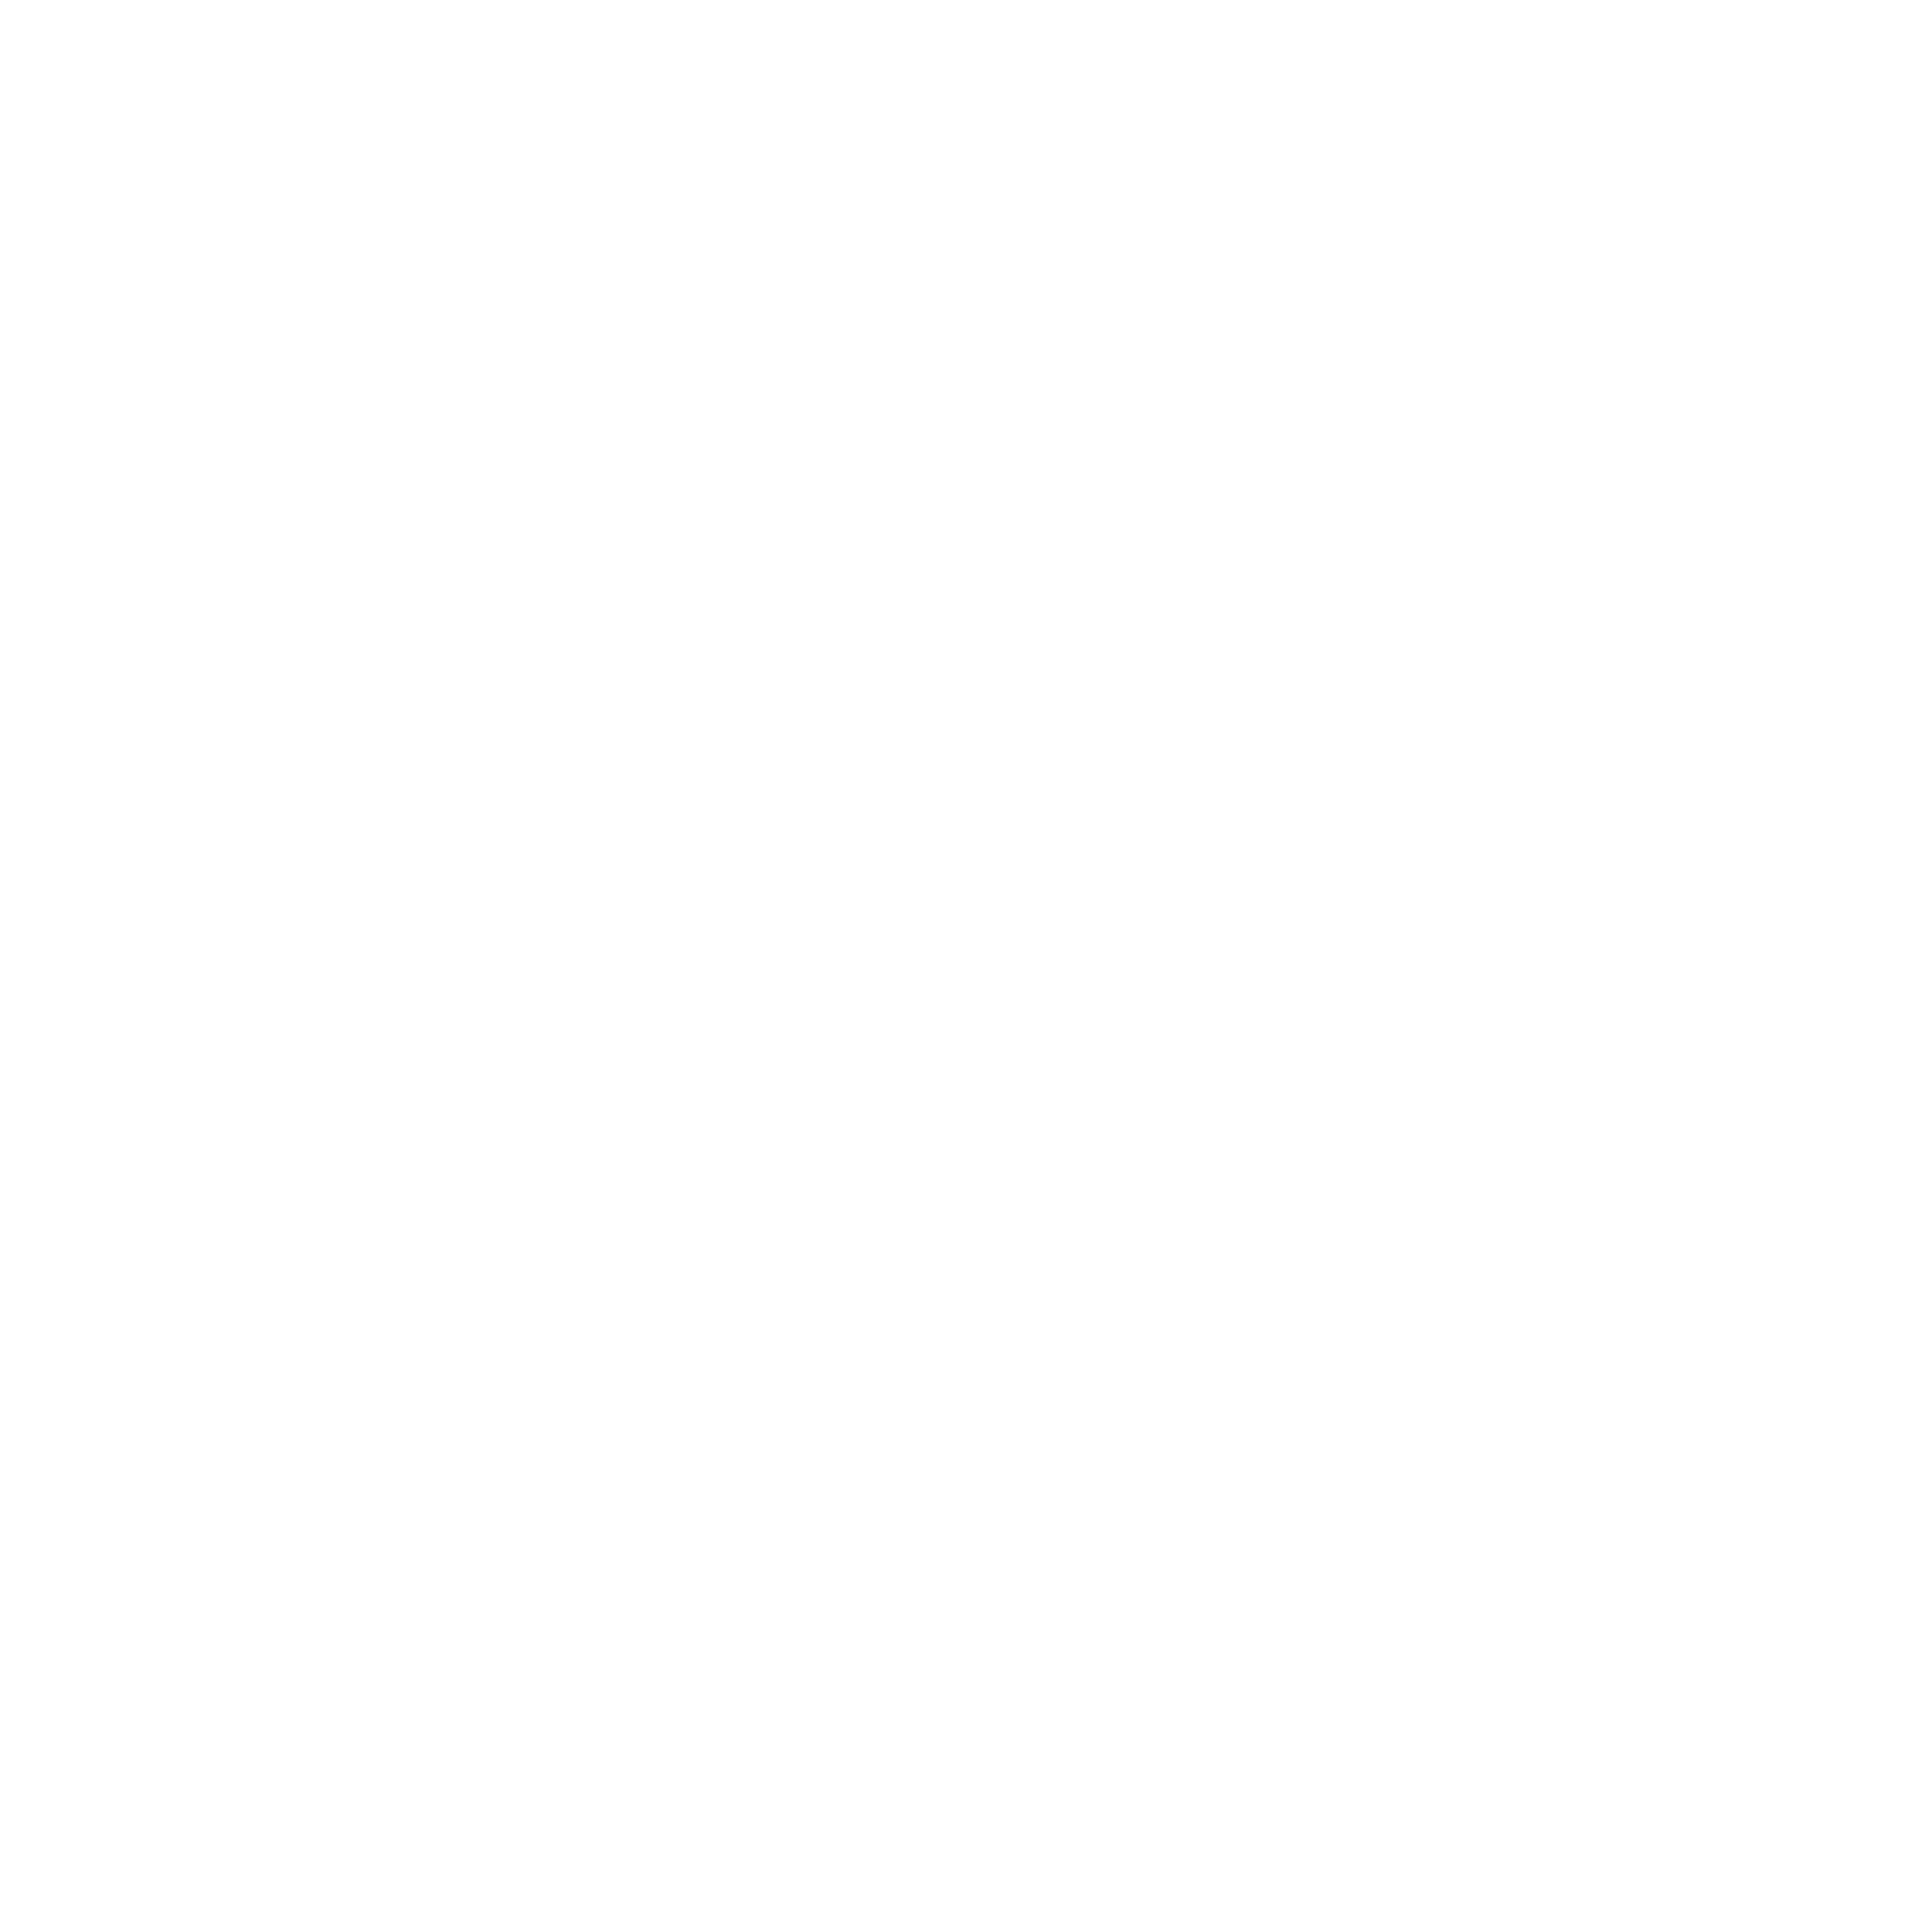 Forage.gr